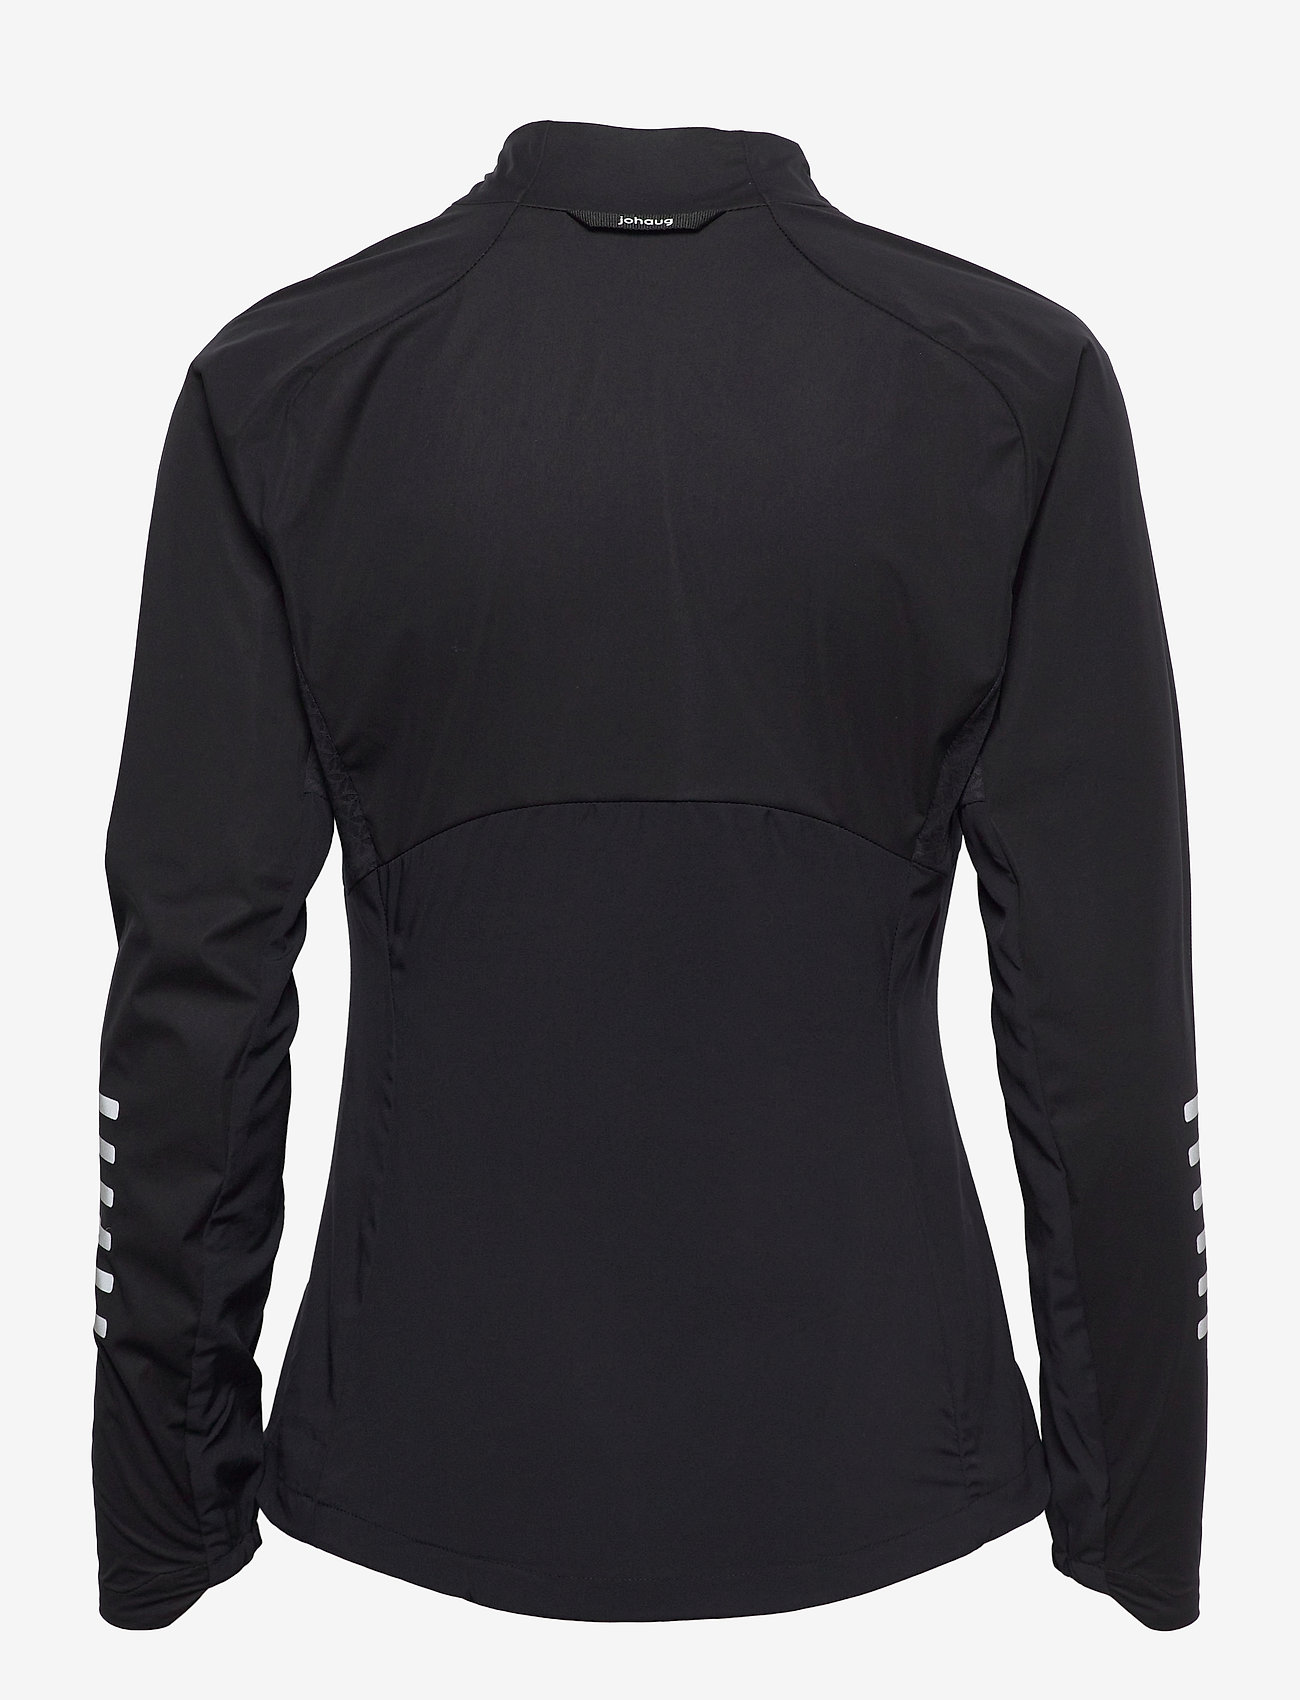 Johaug - Discipline Jacket - sports jackets - black - 1